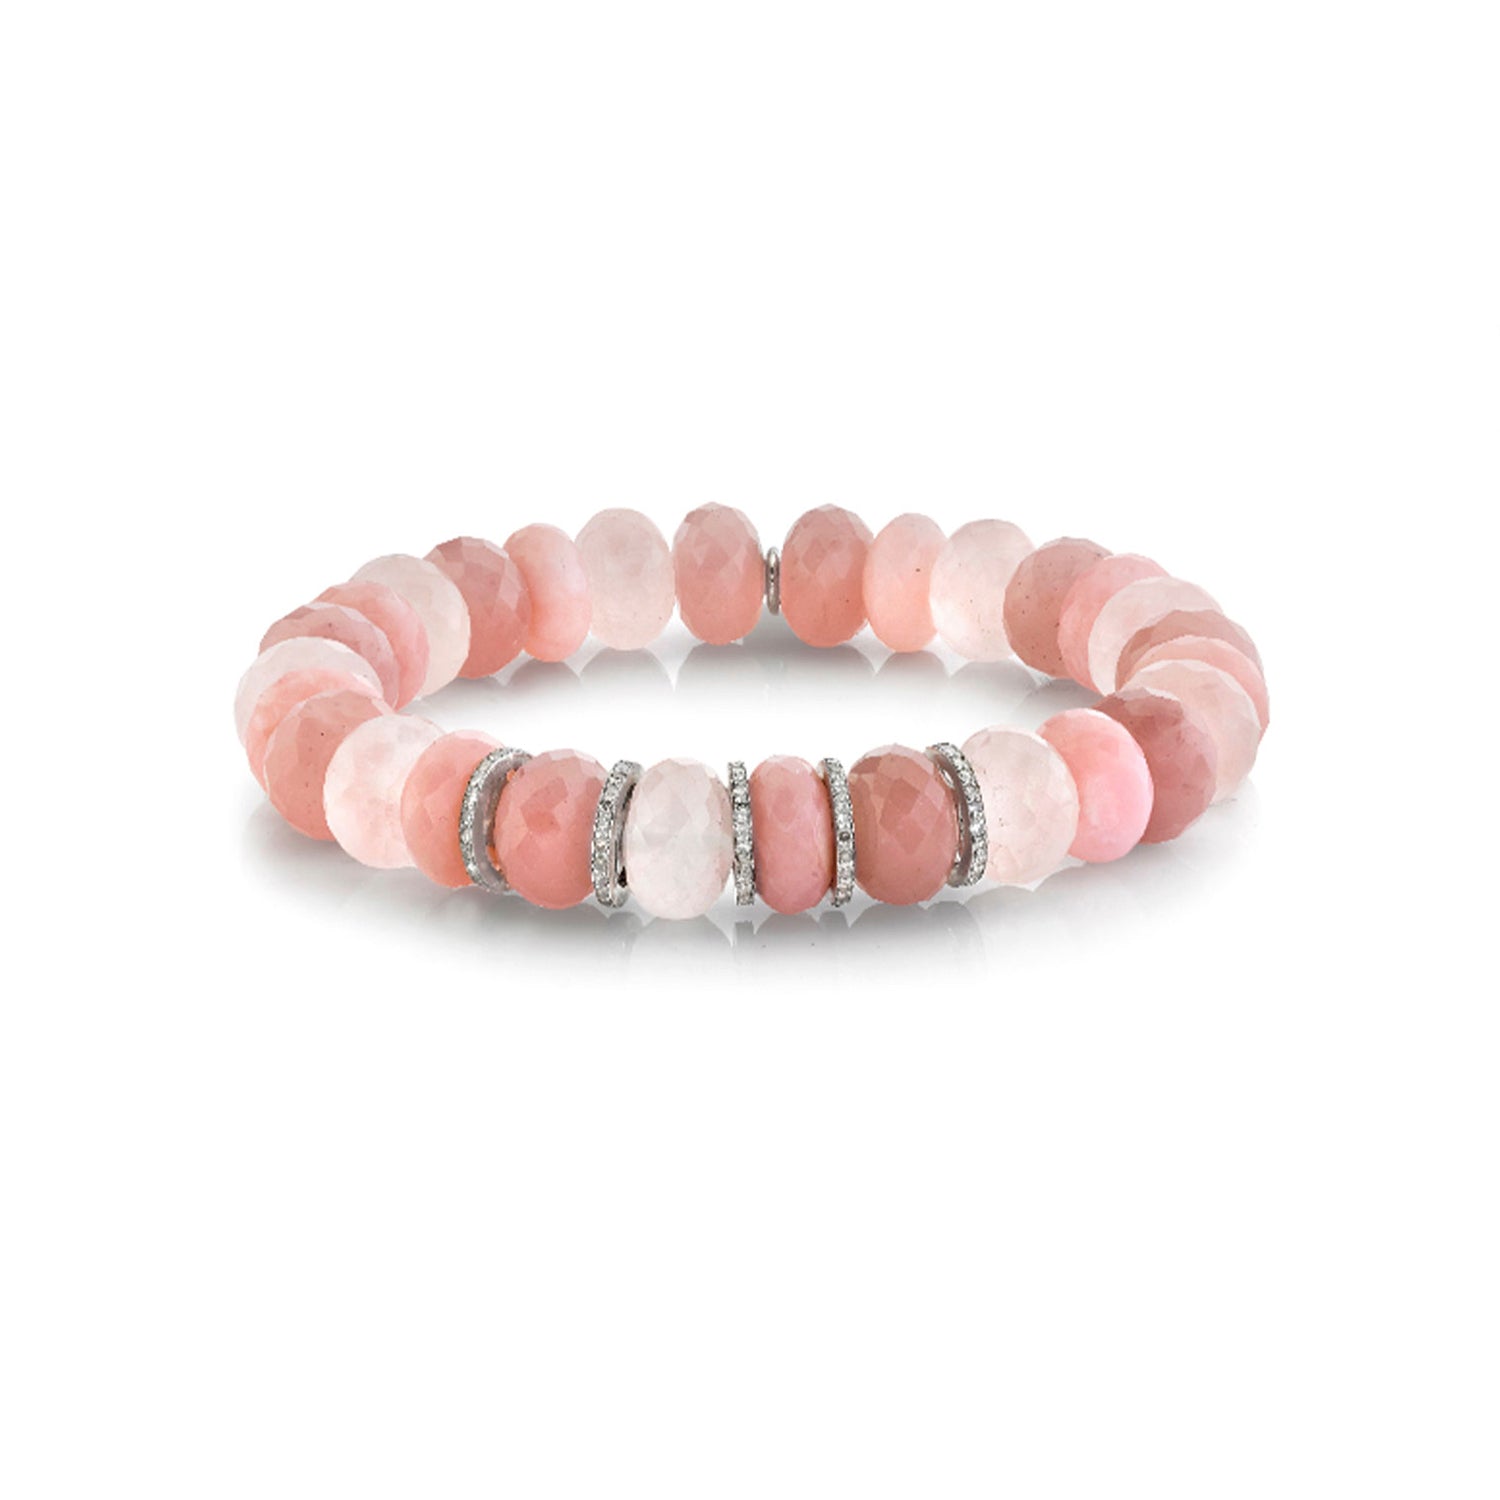 Pink Mixed Gemstone Bracelet with 5 Diamond Rondelles - 10mm  B0000944 - TBird